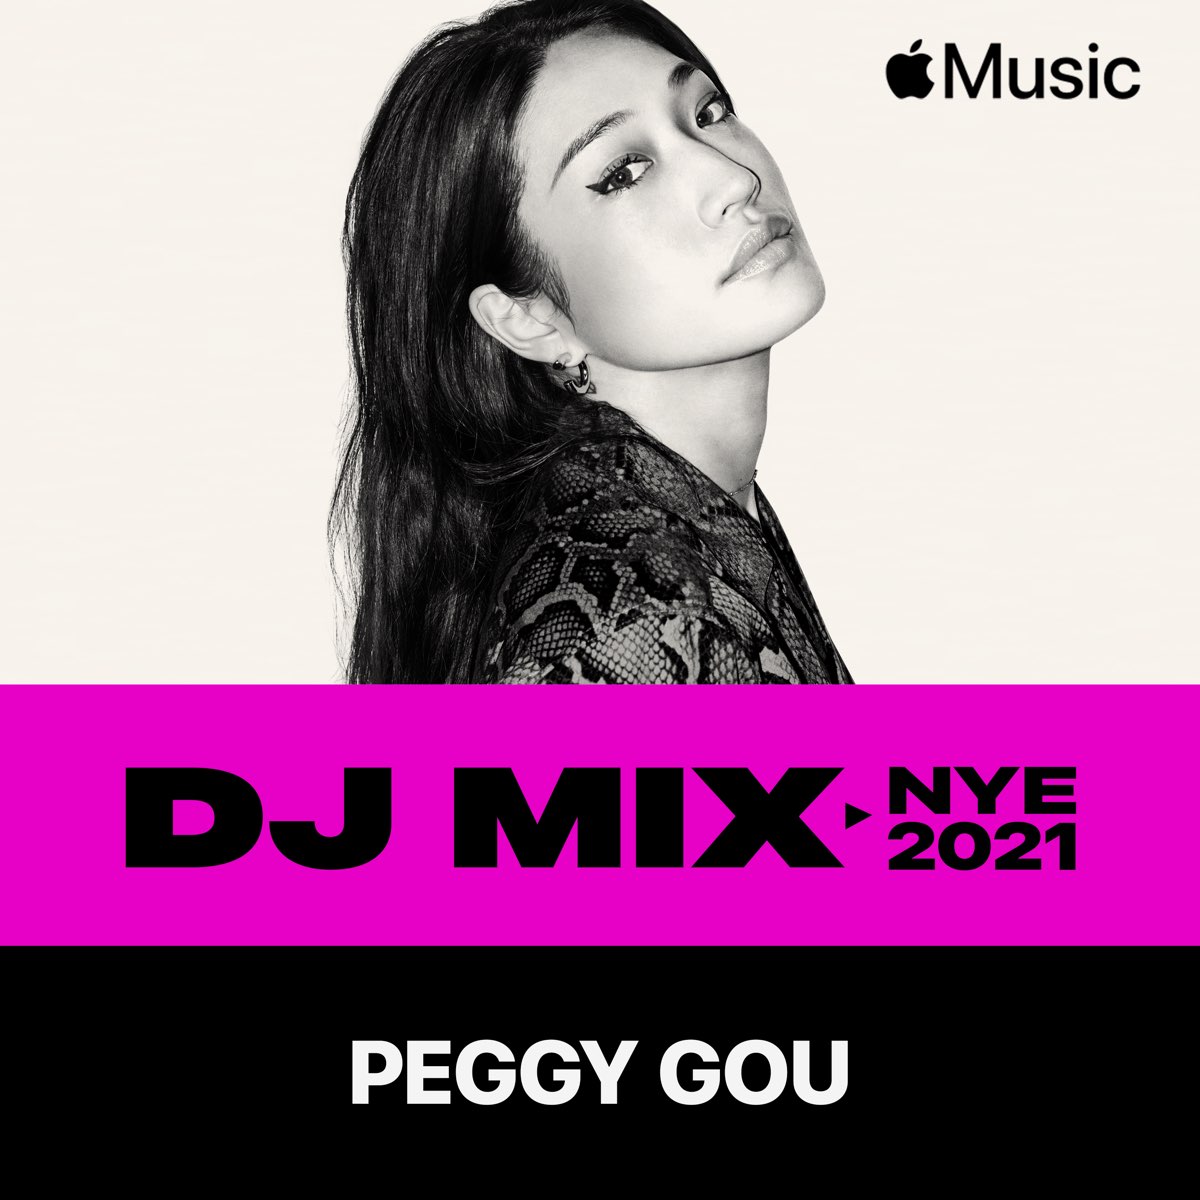 NYE 2021 (DJ Mix) - Album by Peggy Gou - Apple Music